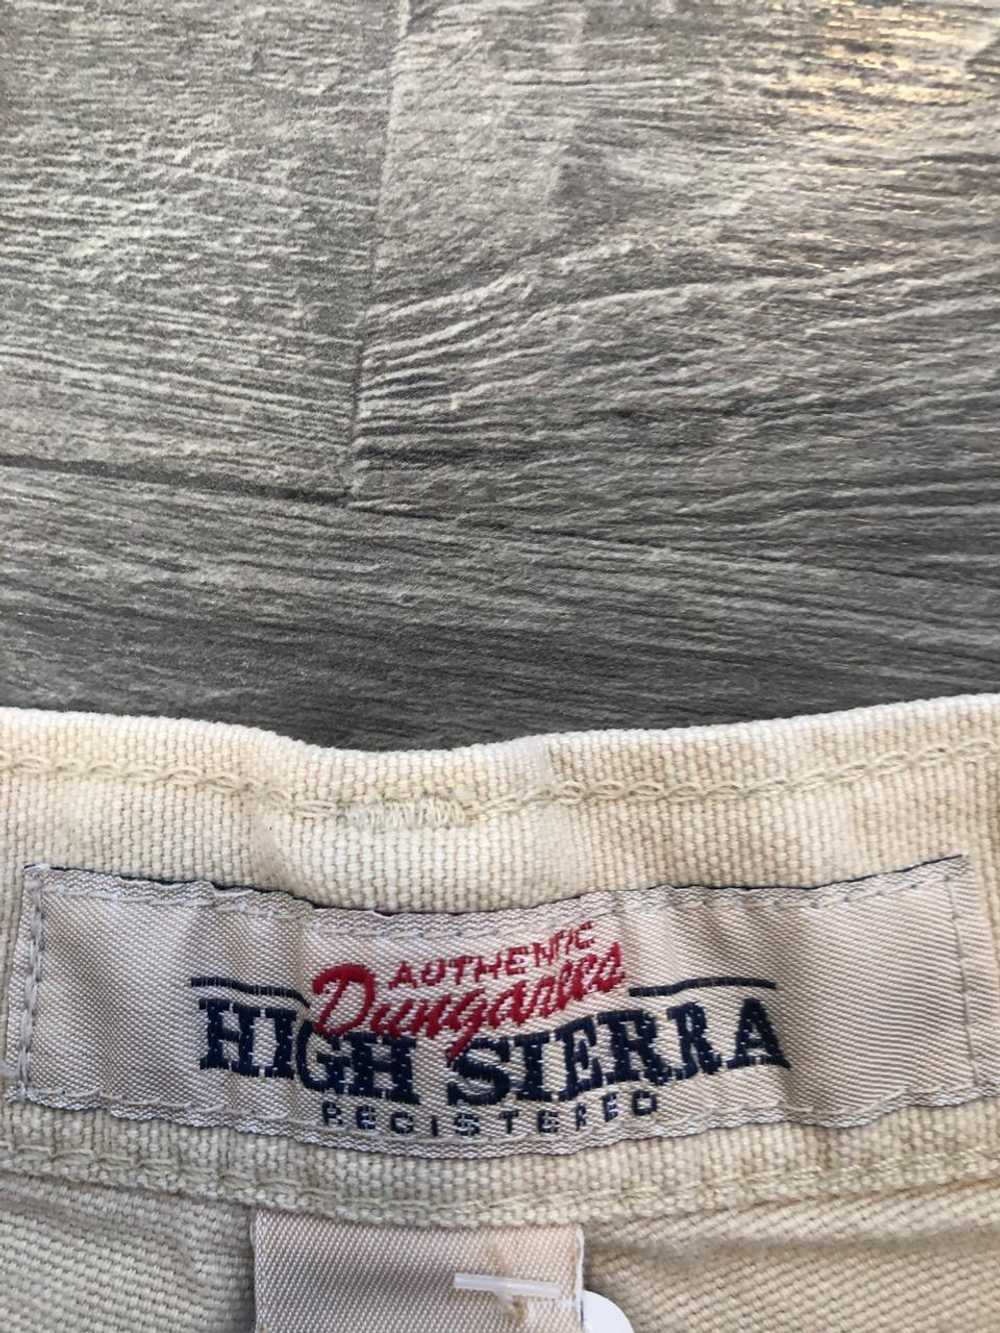 High Sierra Vintage 90’s carpenter dungarees (10)… - image 5